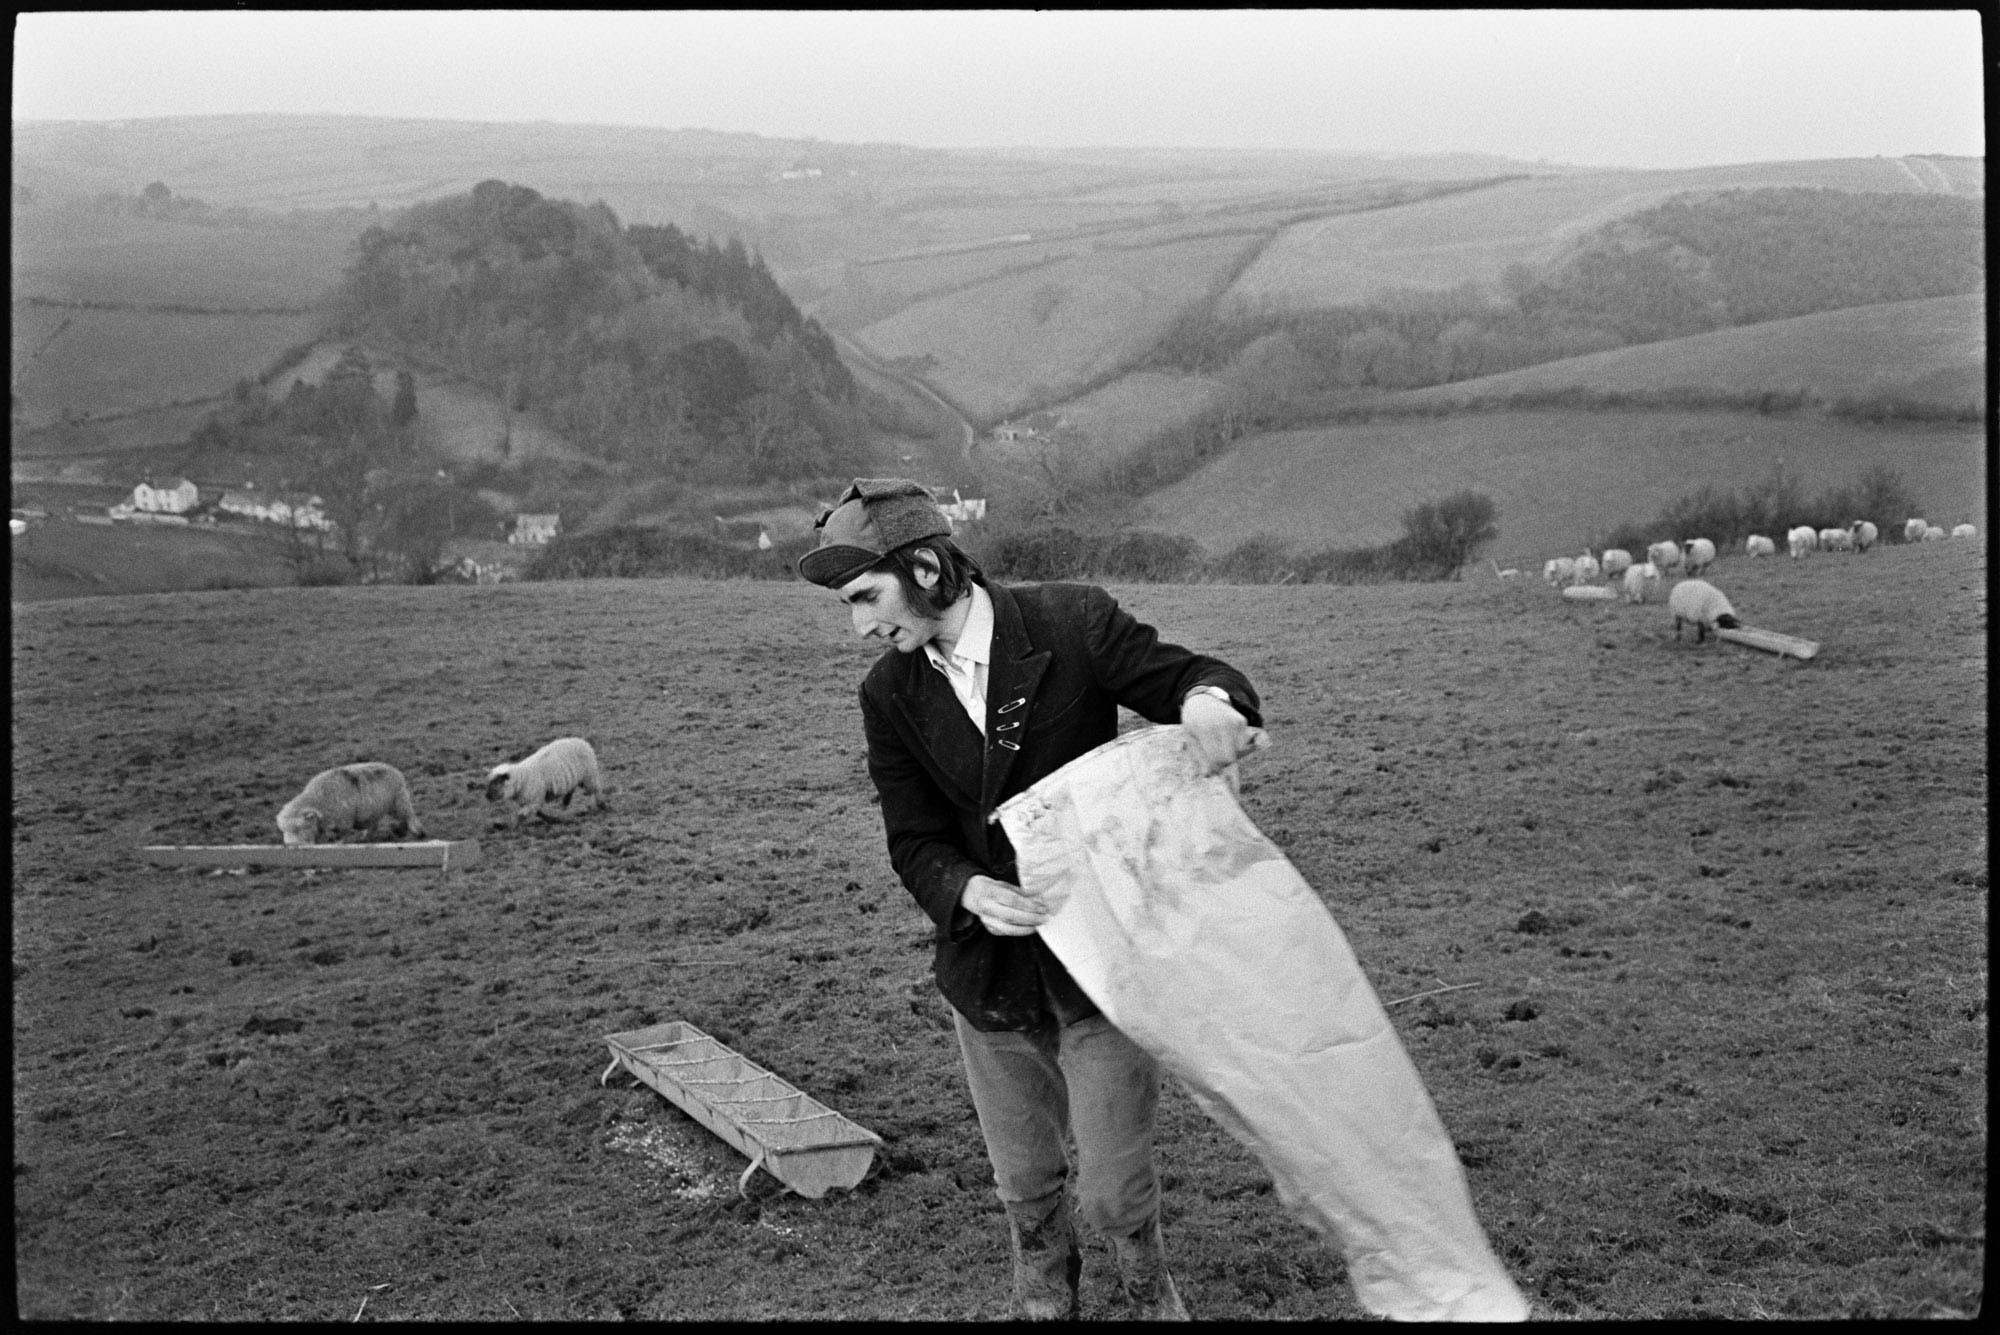 Geoff Vaisey feeding sheep by James Ravilious